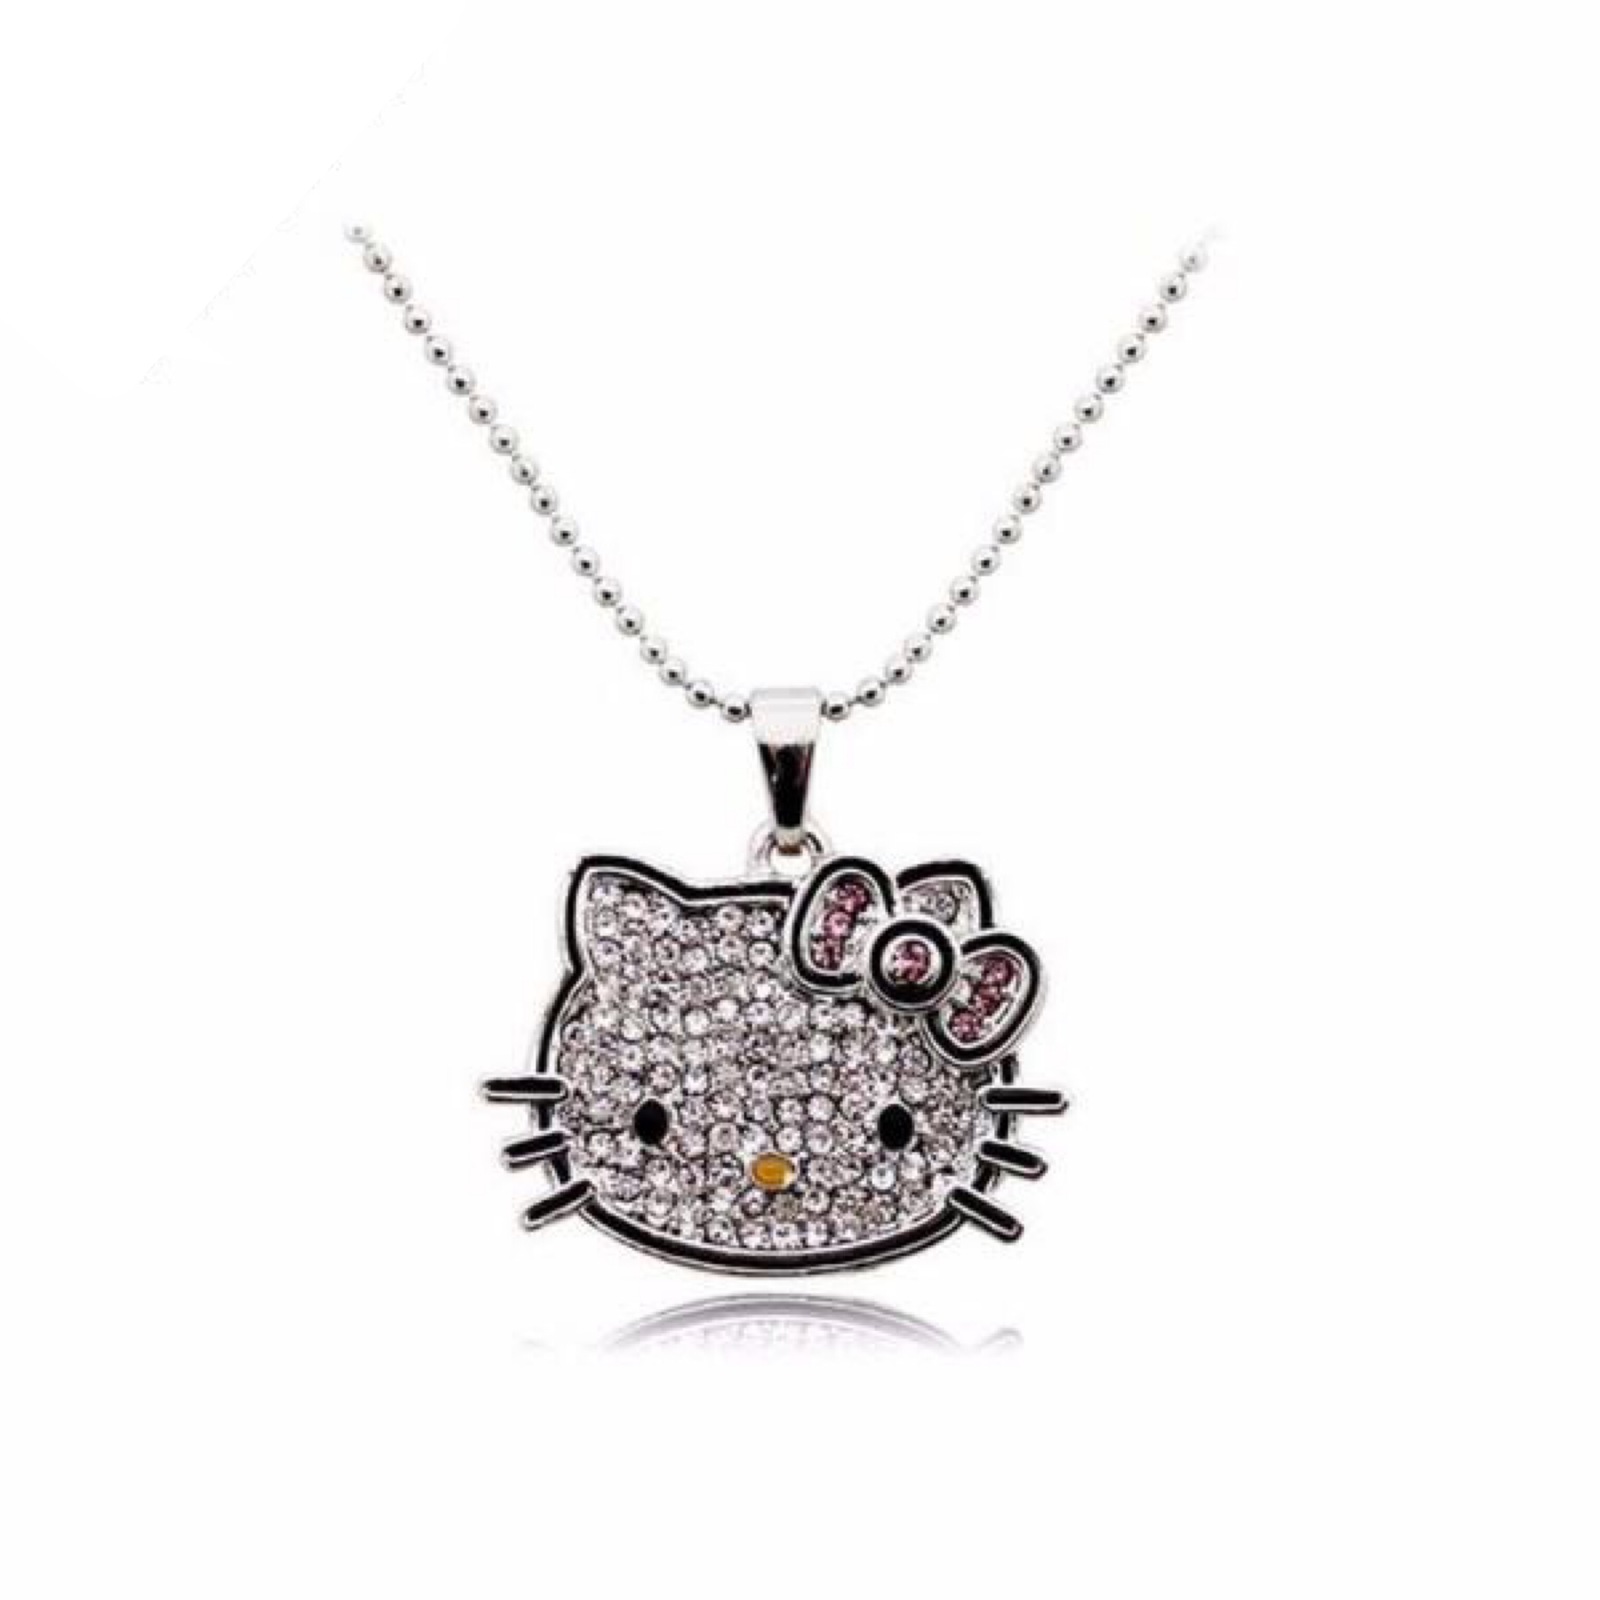 Cute Hello Kitty Rhinestone Crystal Pendant Necklace Jewellery Kawaii Accessorie - $3.99